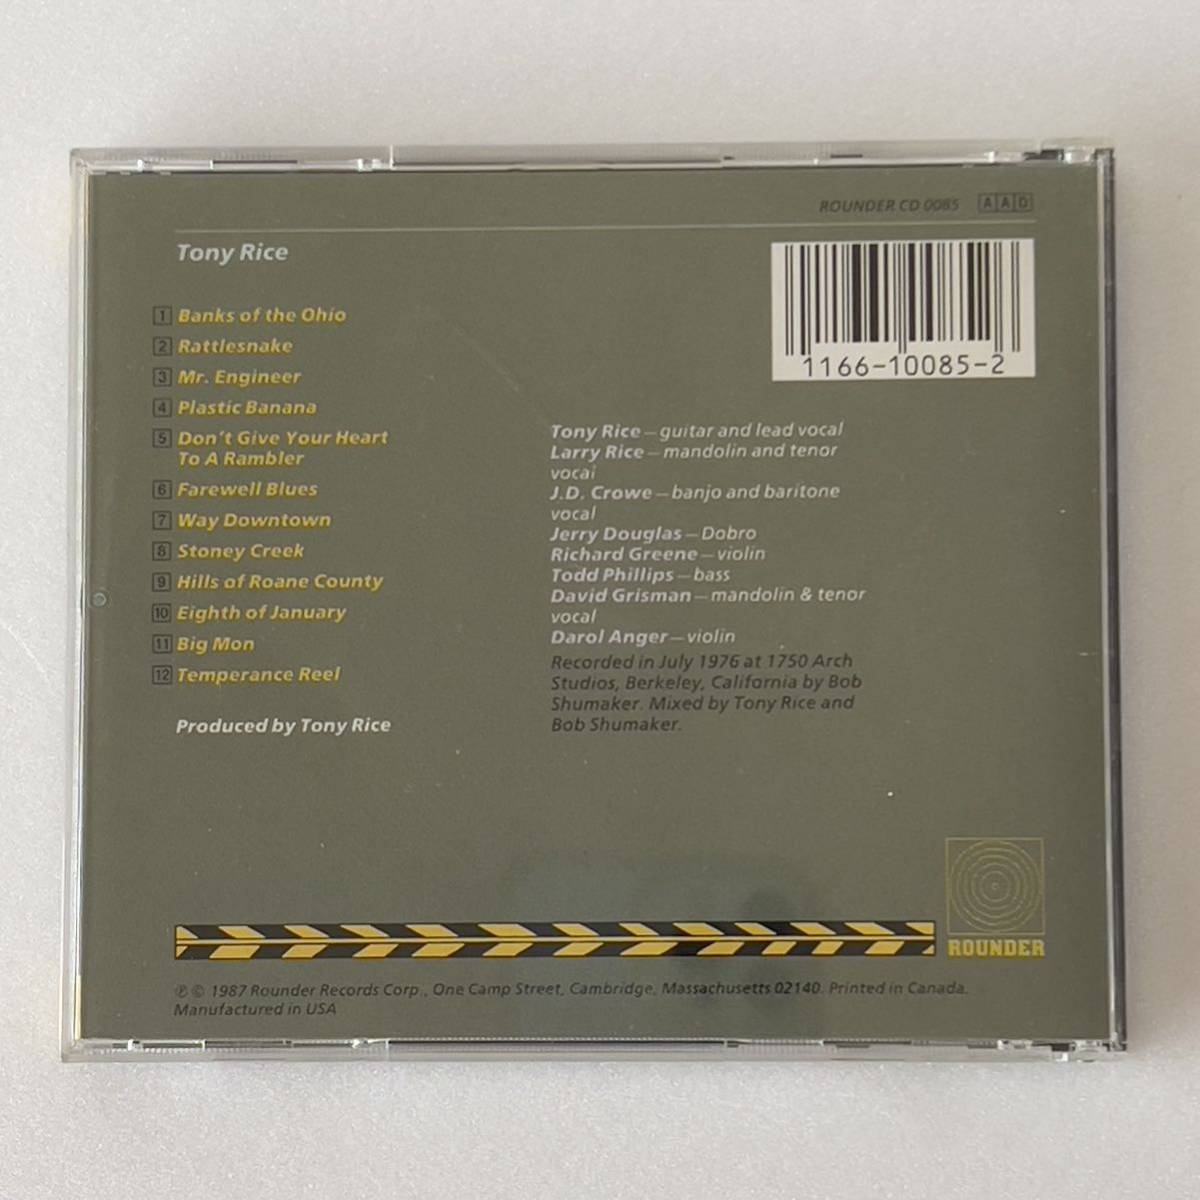 [CD][ зарубежная запись ]TONY RICE ROUNDFRCD0085